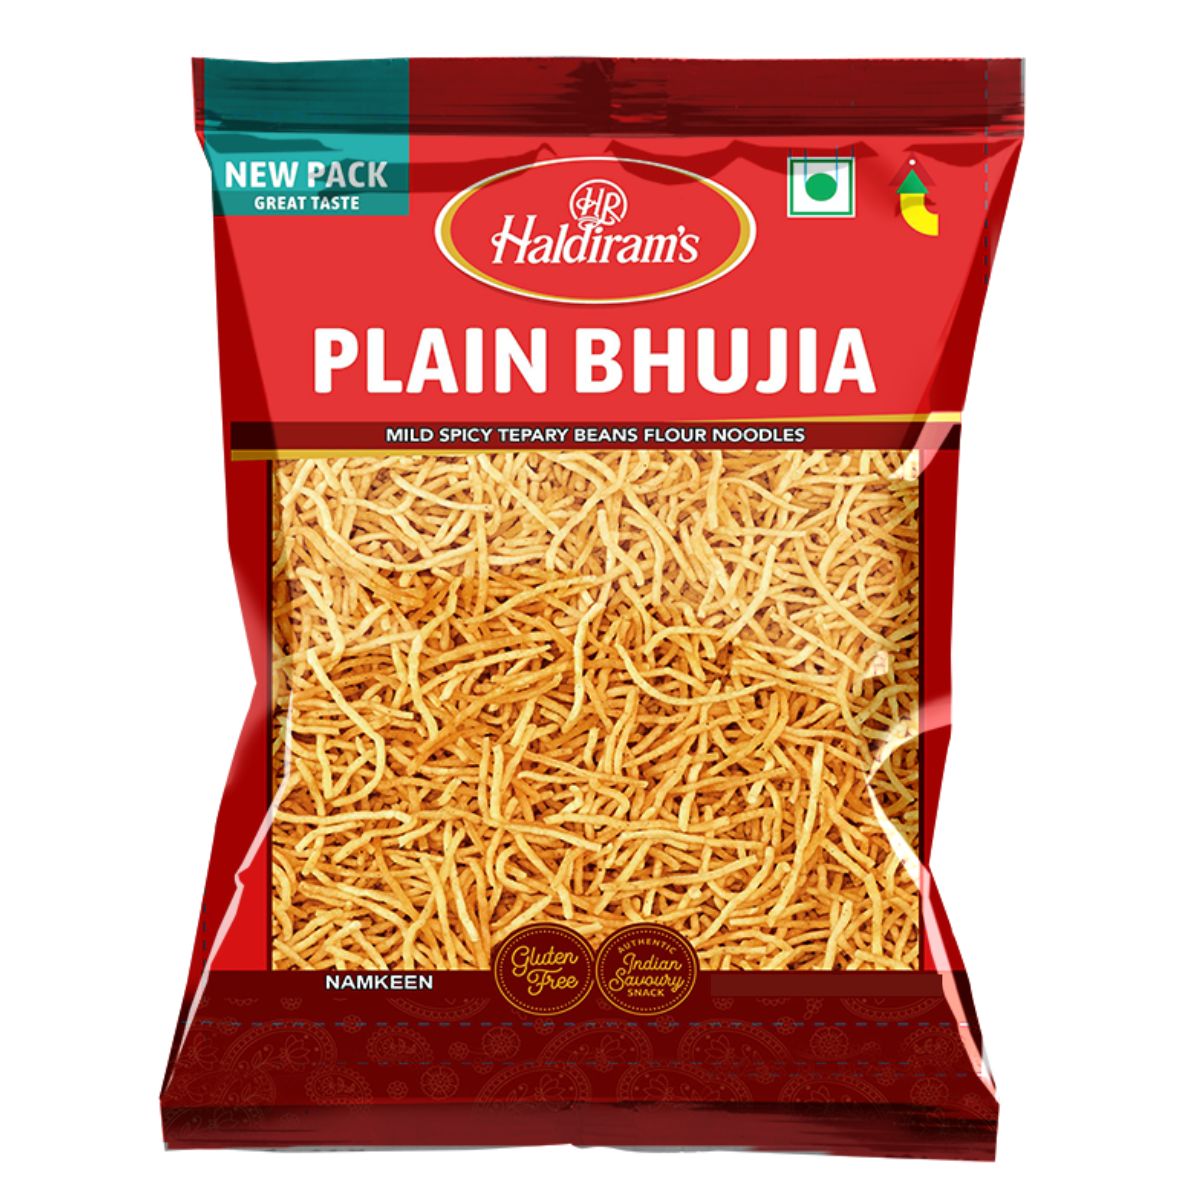 Haldiram's Plain Bhujia - Mild Spicy Tepary Beans Flour Noodles - 400g